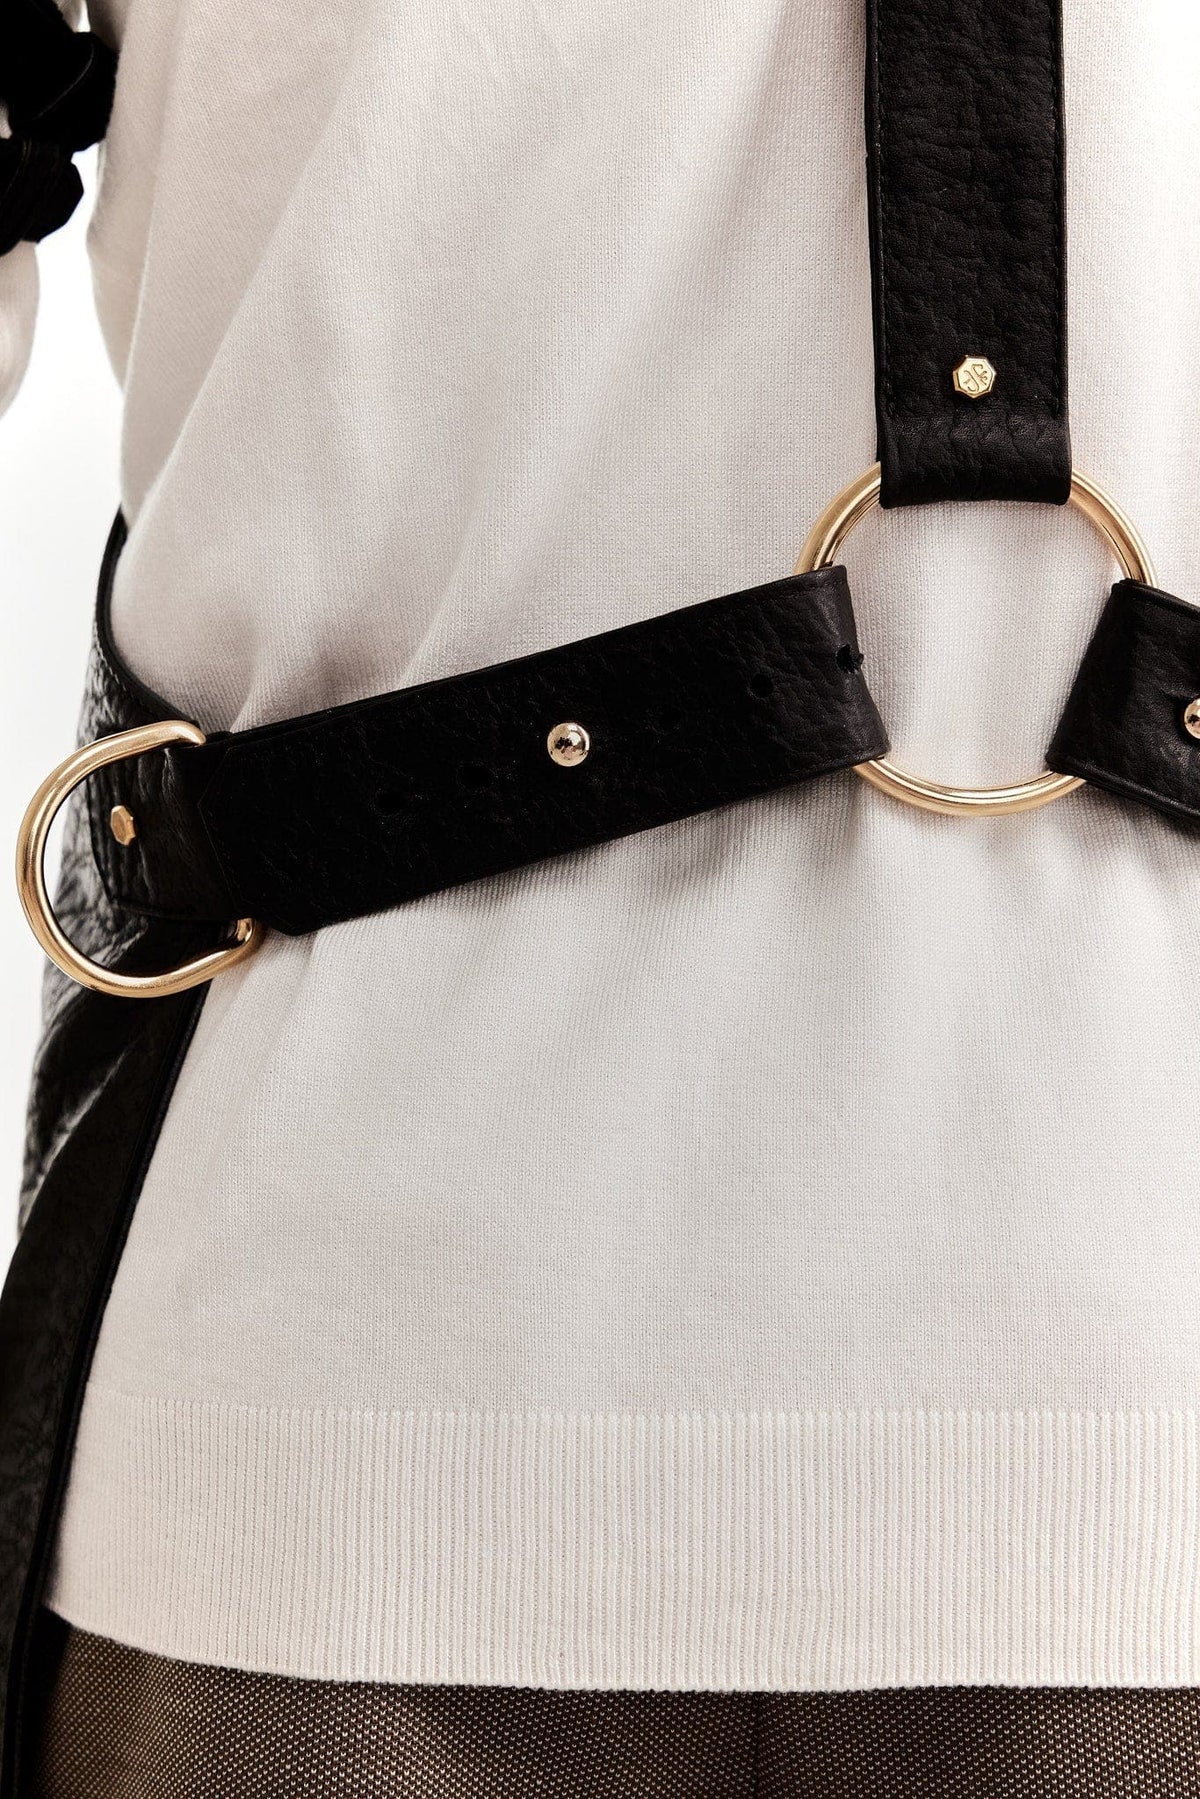 Eskandur men&#39;s black leather luxury premium apron white shirt gold o-ring